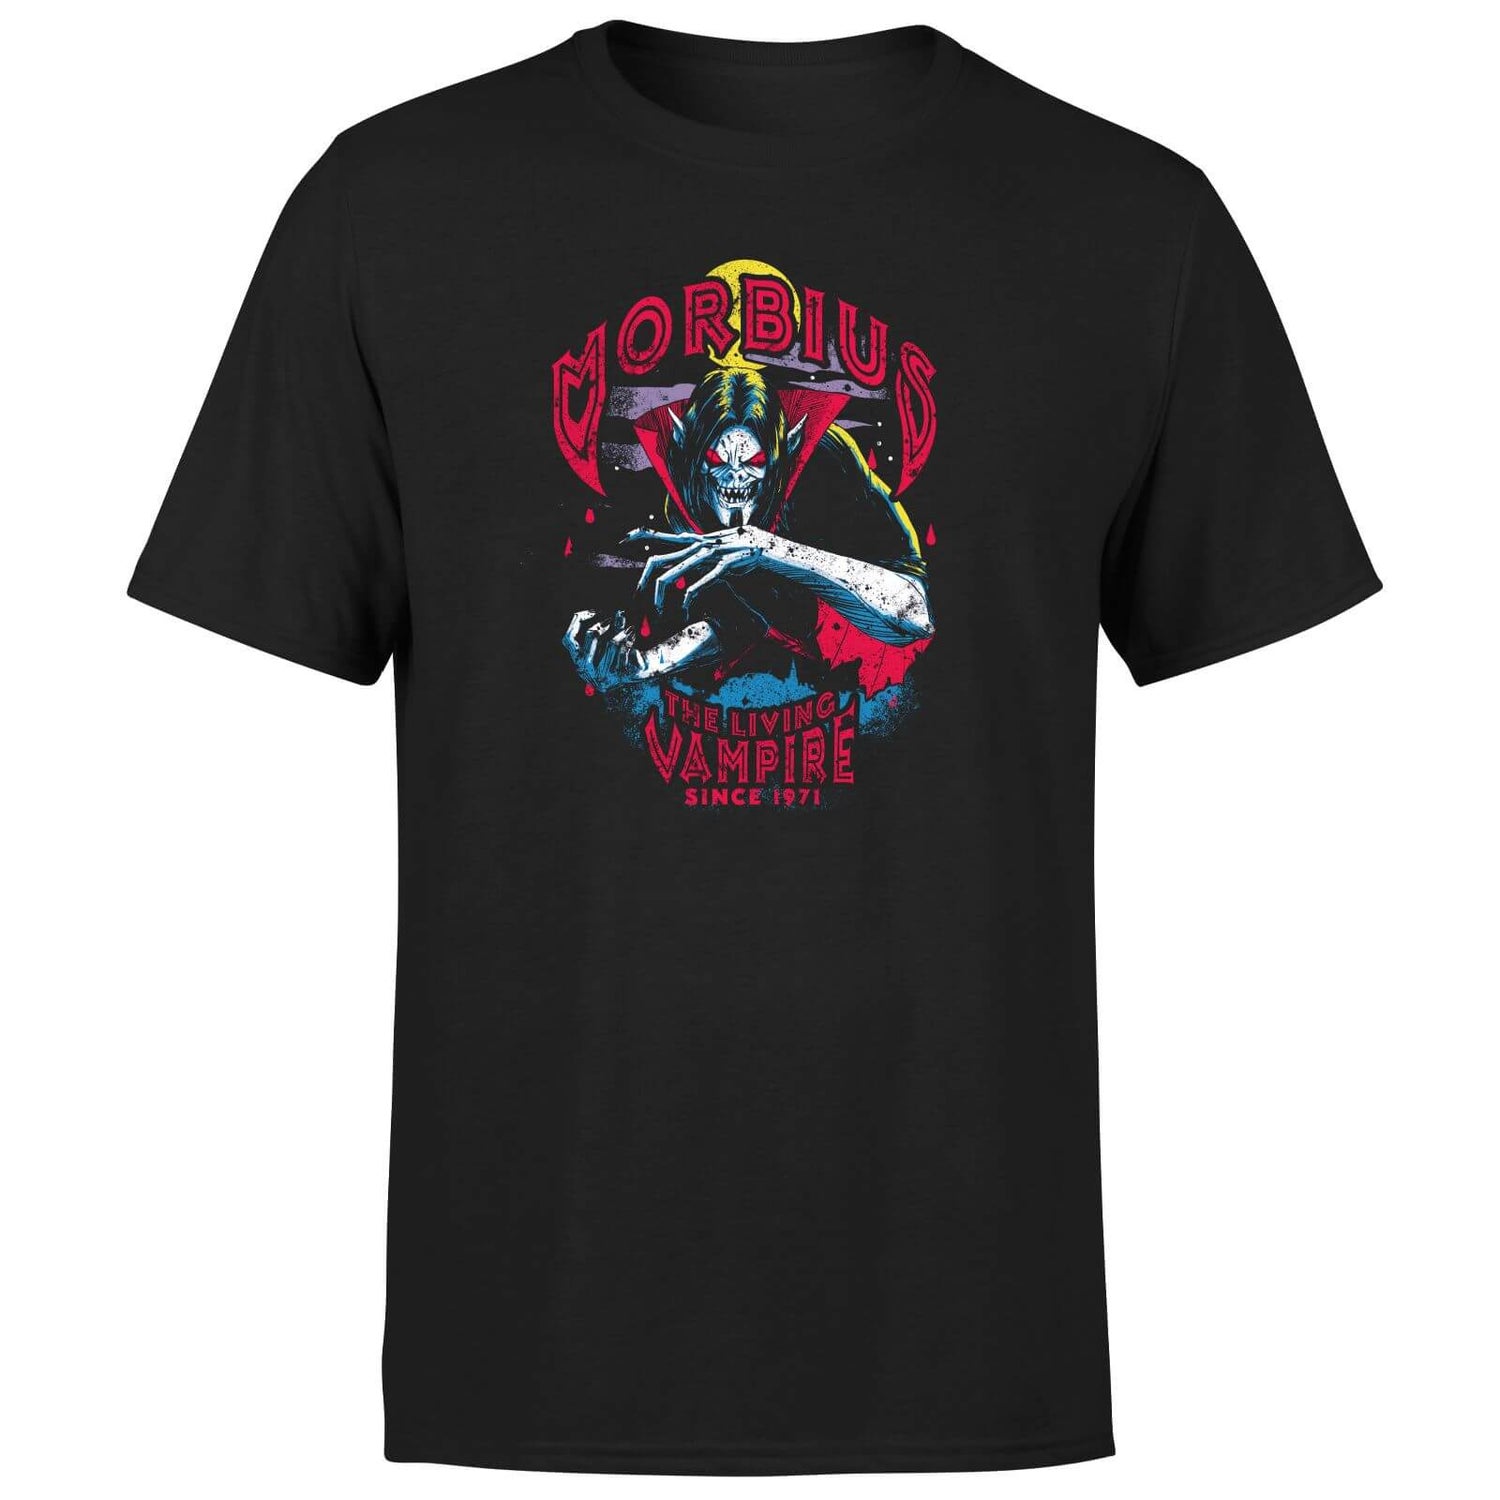 Morbius Since 1971 Men's T-Shirt - Black